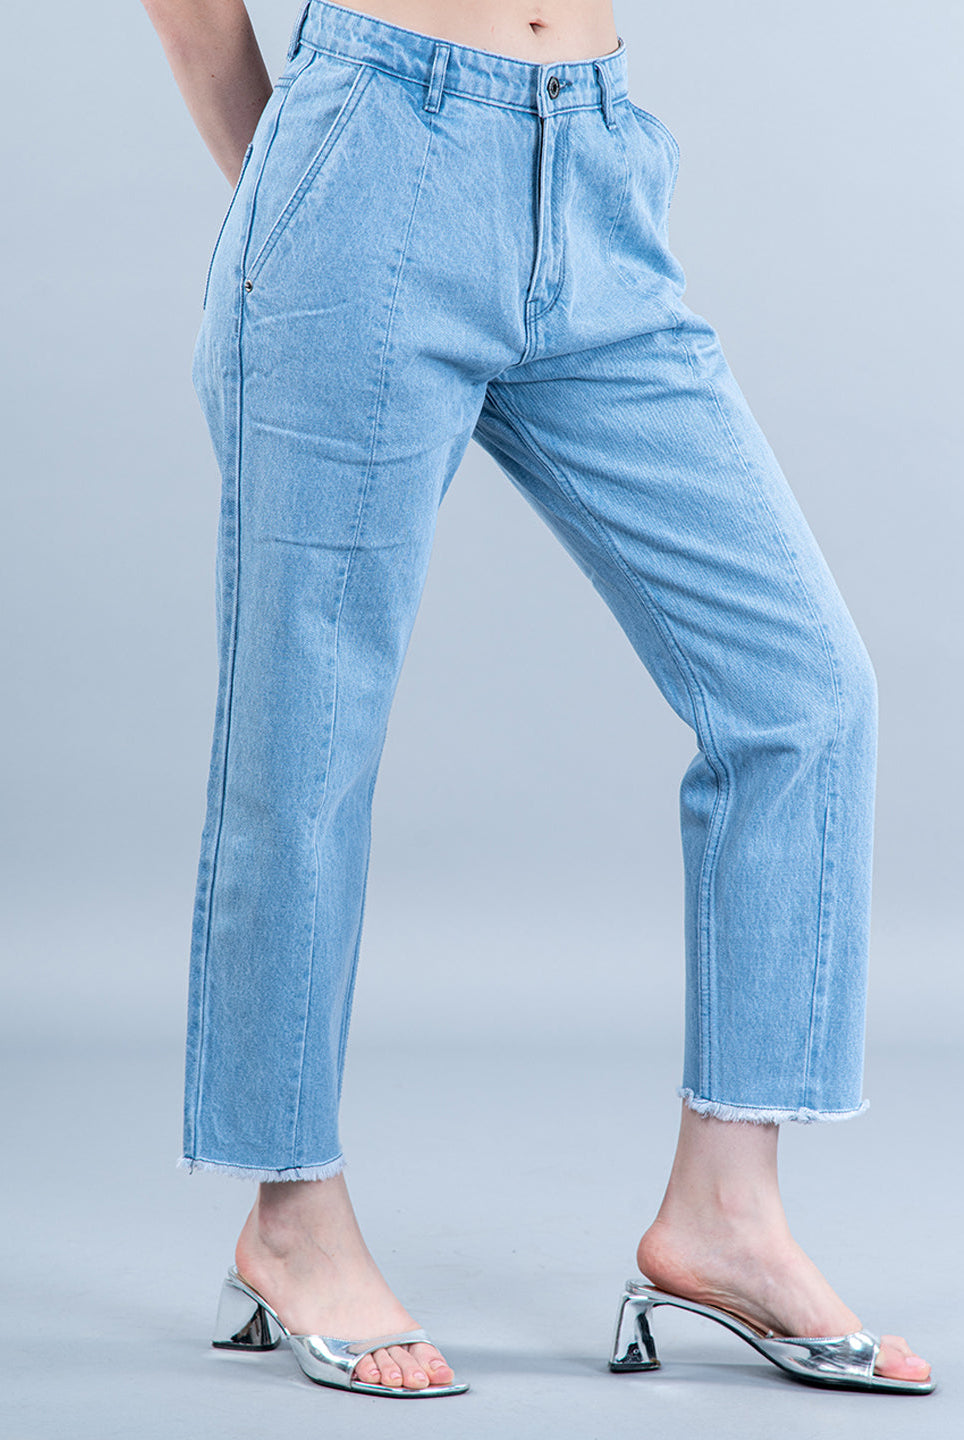 girls jeans design